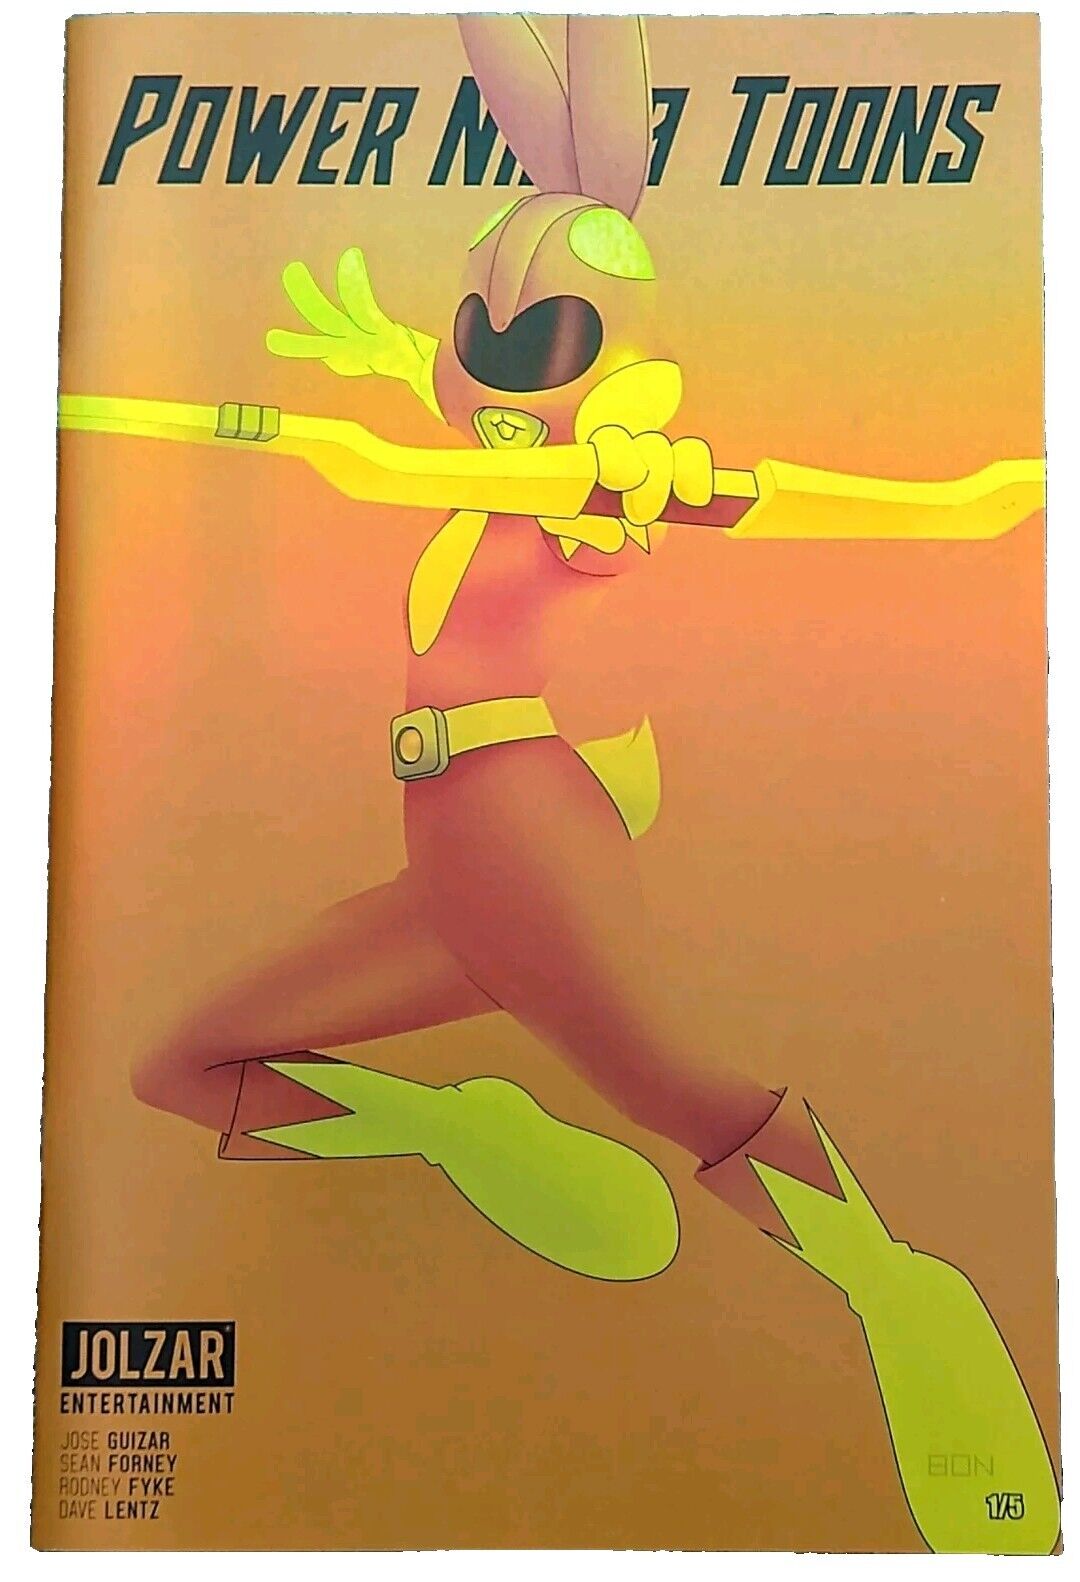 Power Ninja Toons Pink Ranger MMPR  Homage GOLD Foil Variant Cover #1/5